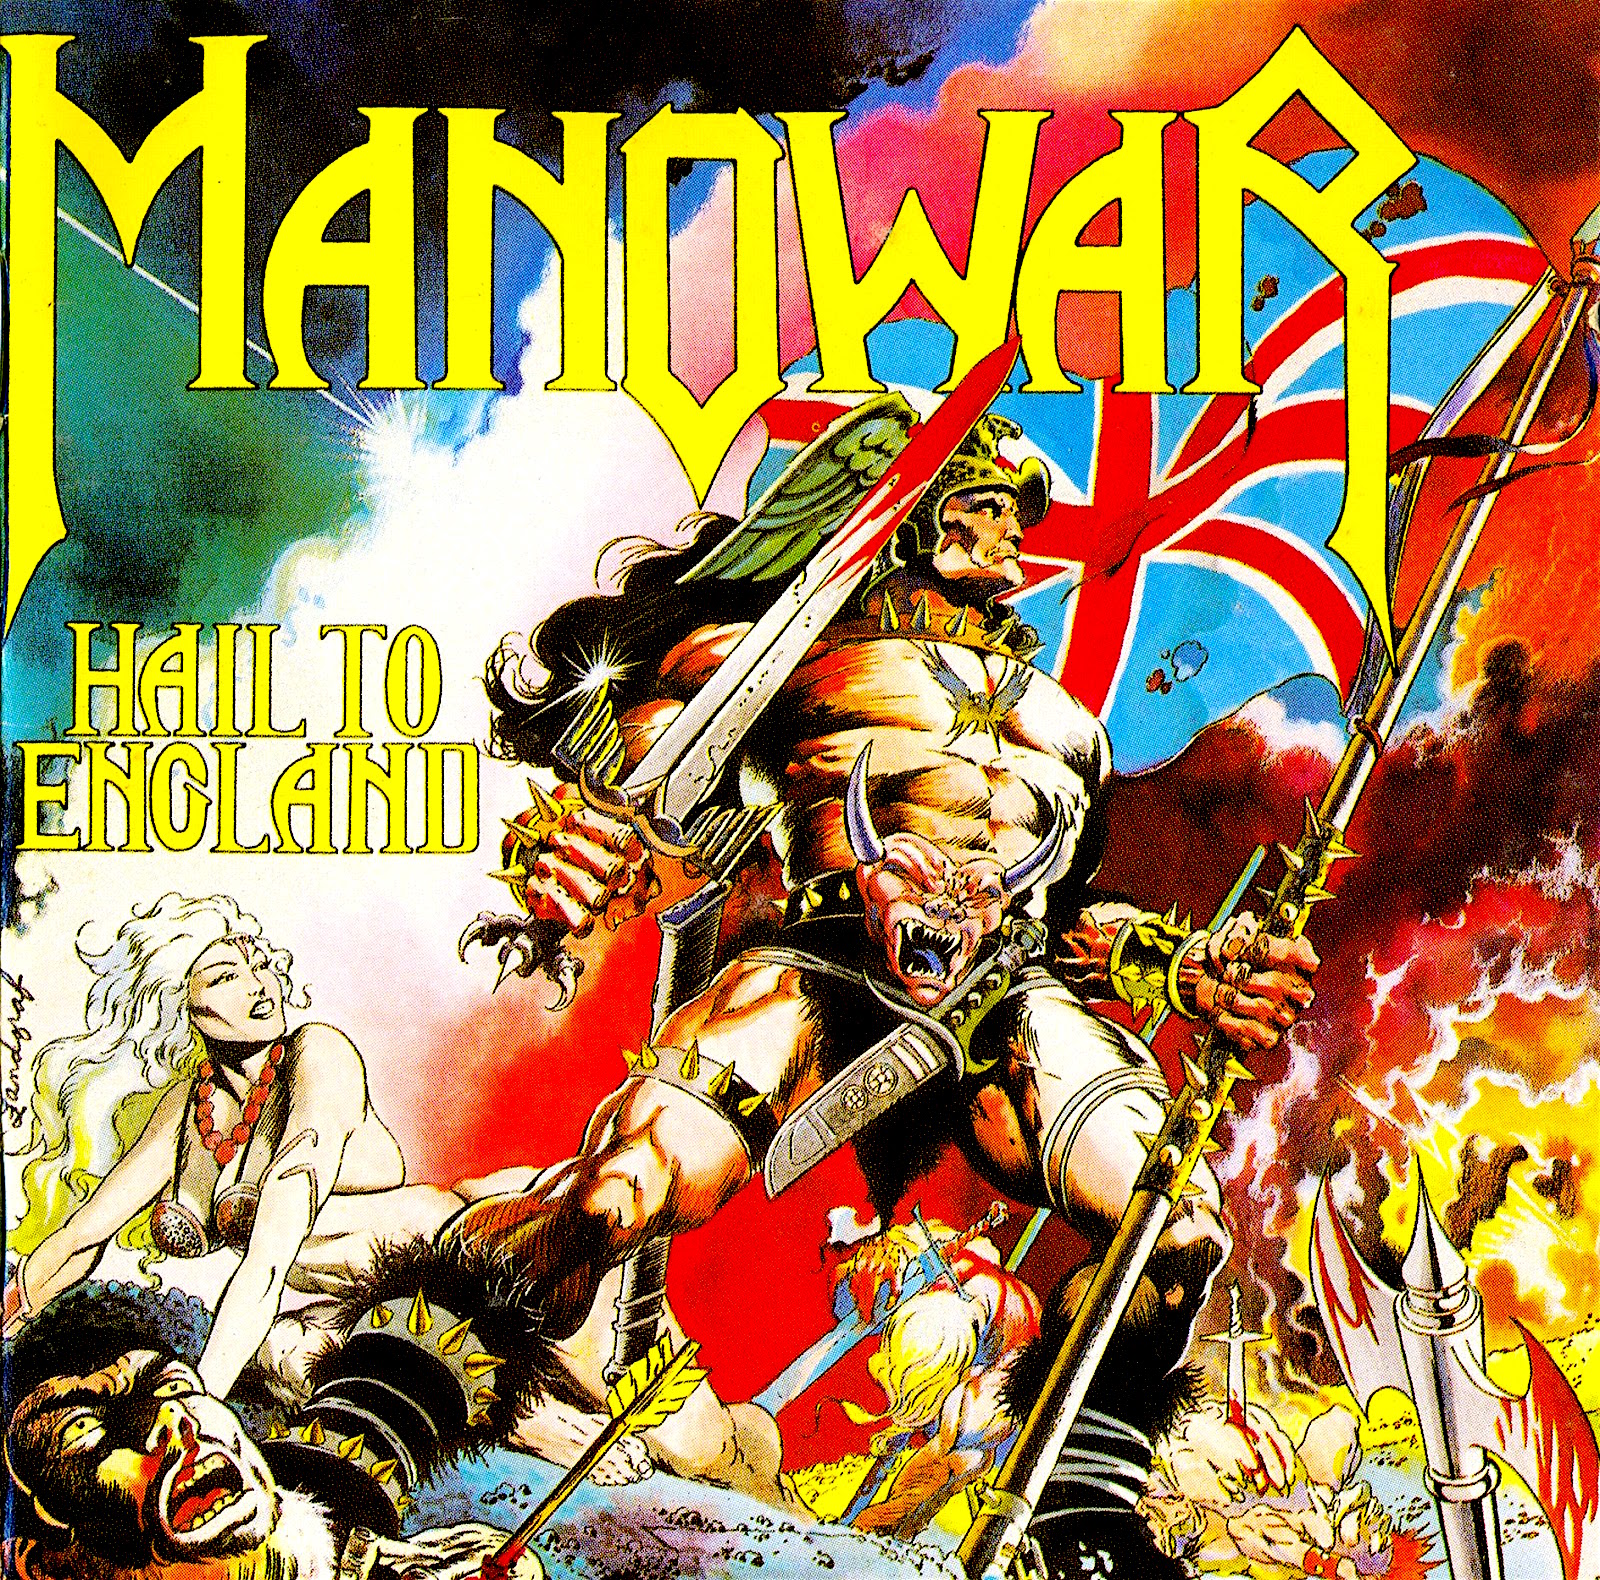 MANOWAR - Hail to England cover 